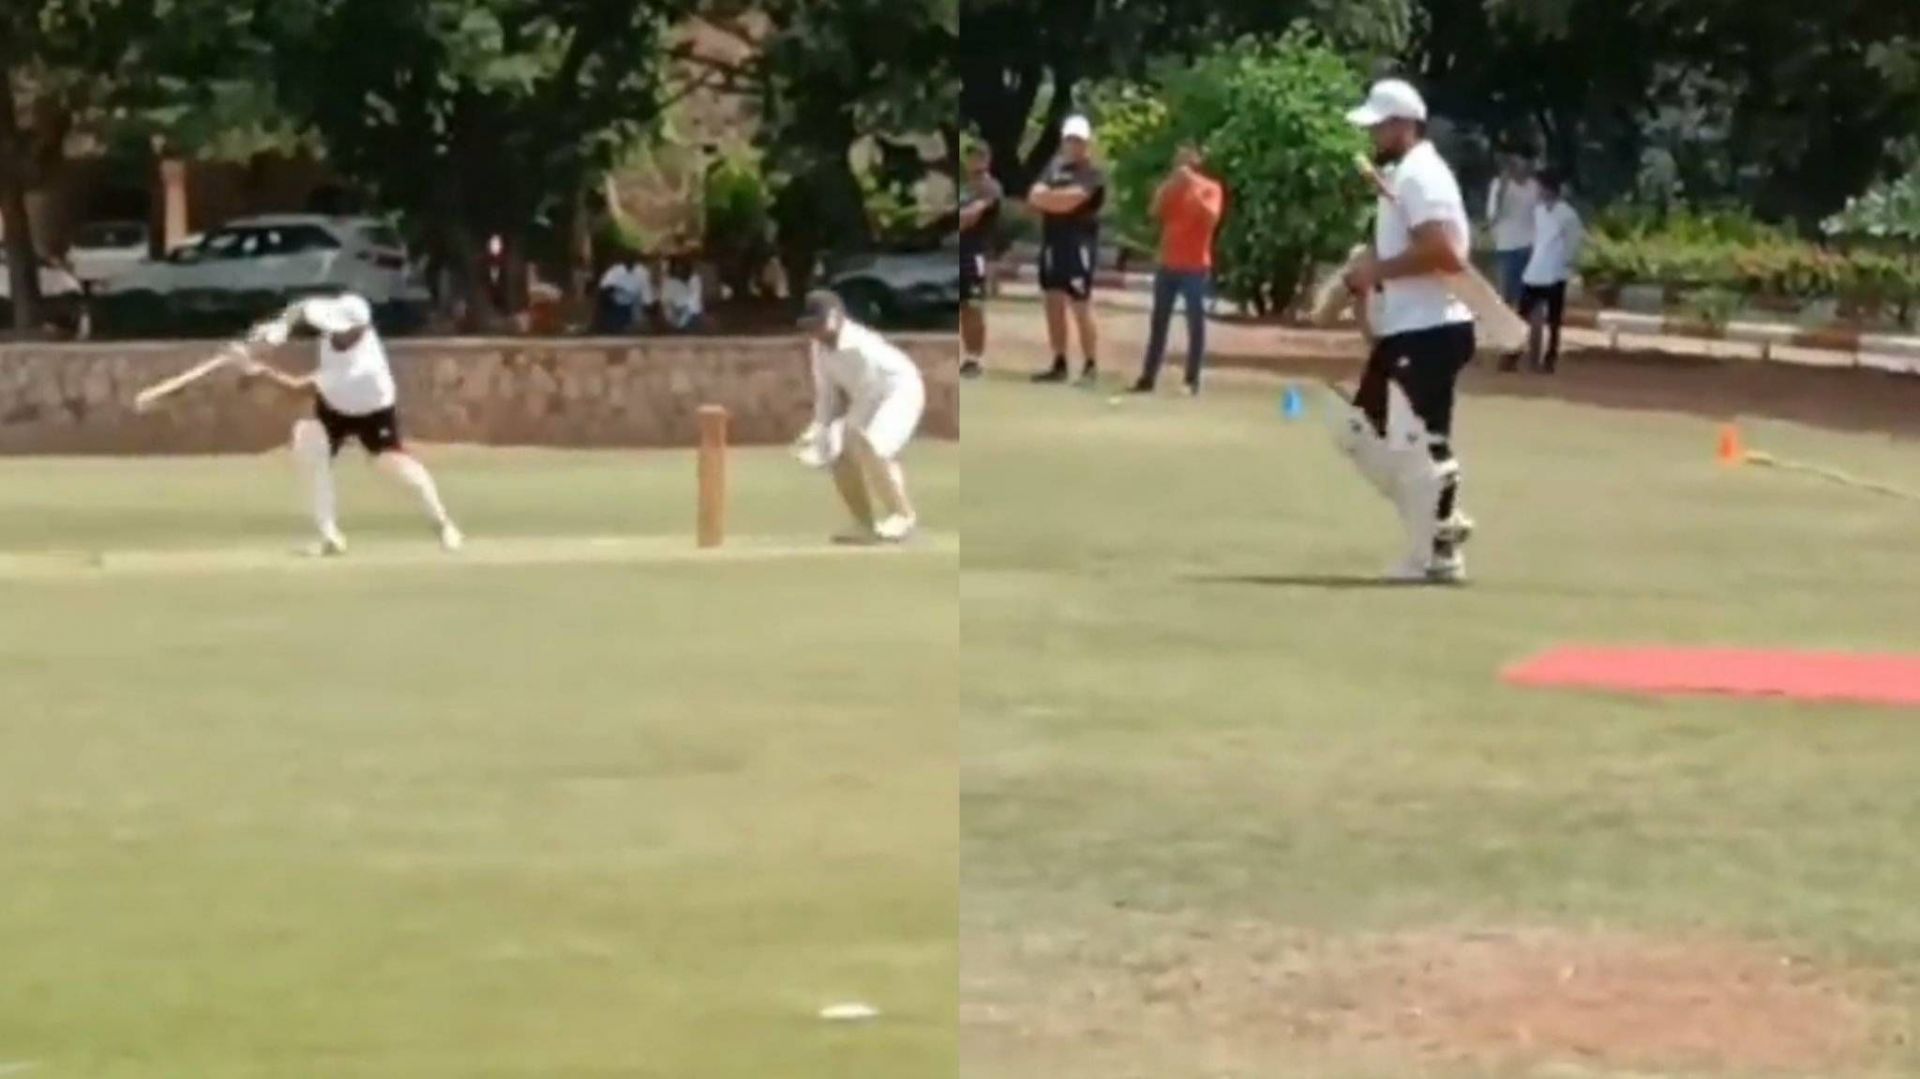 Rishabh Pant has resumed batting on the pitch (Image: Twitter)